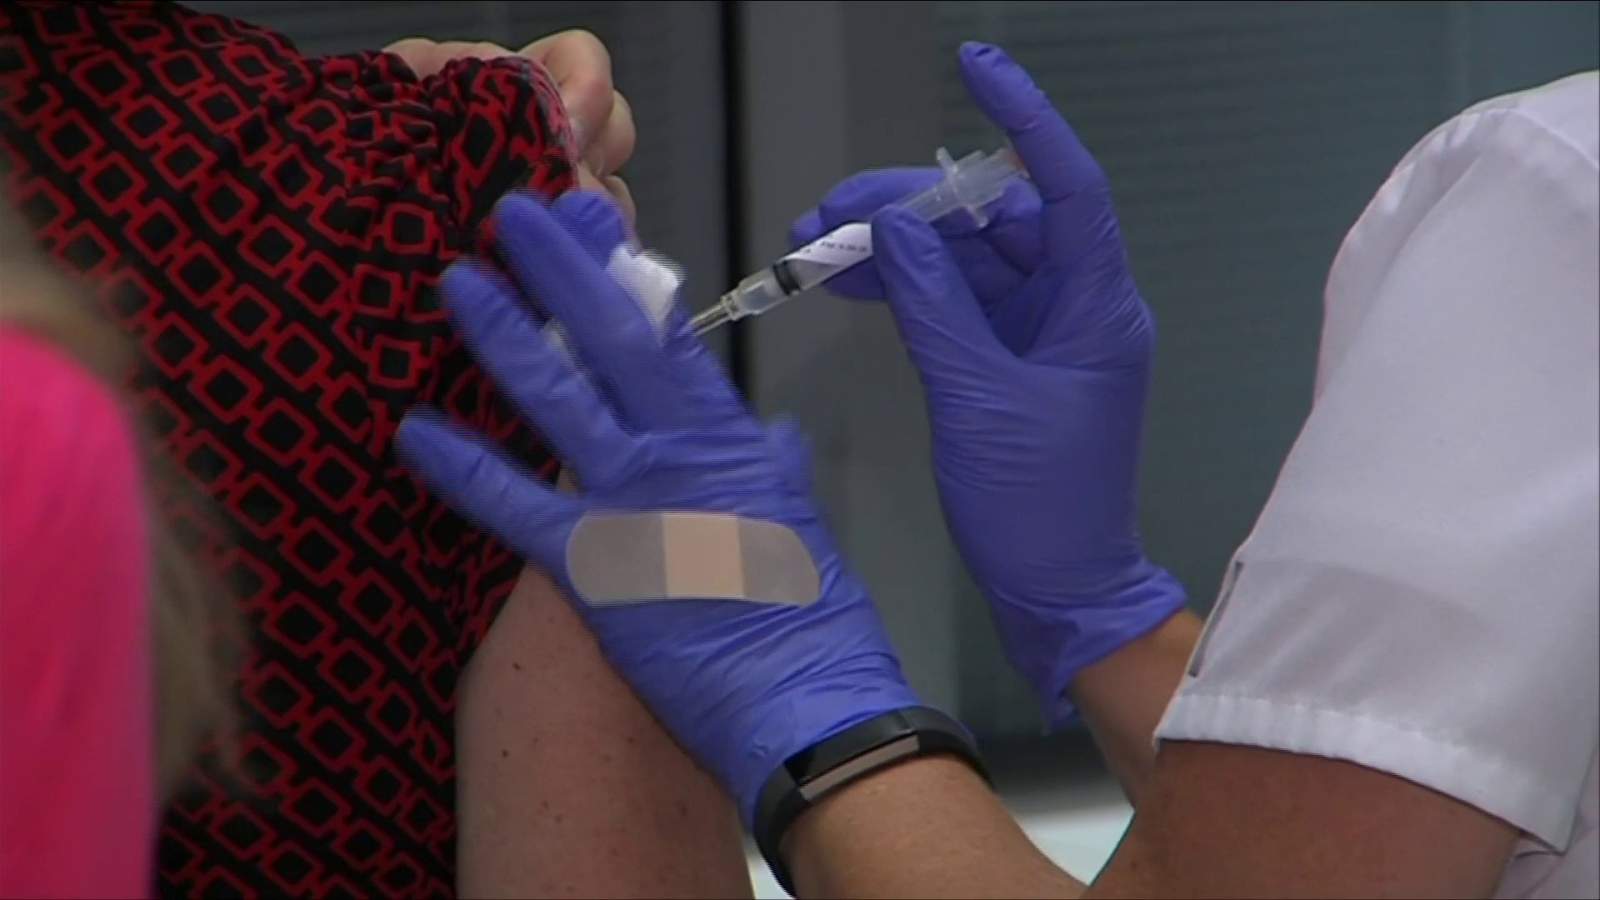 Doctors say coronavirus safety precautions may help slow flu outbreaks